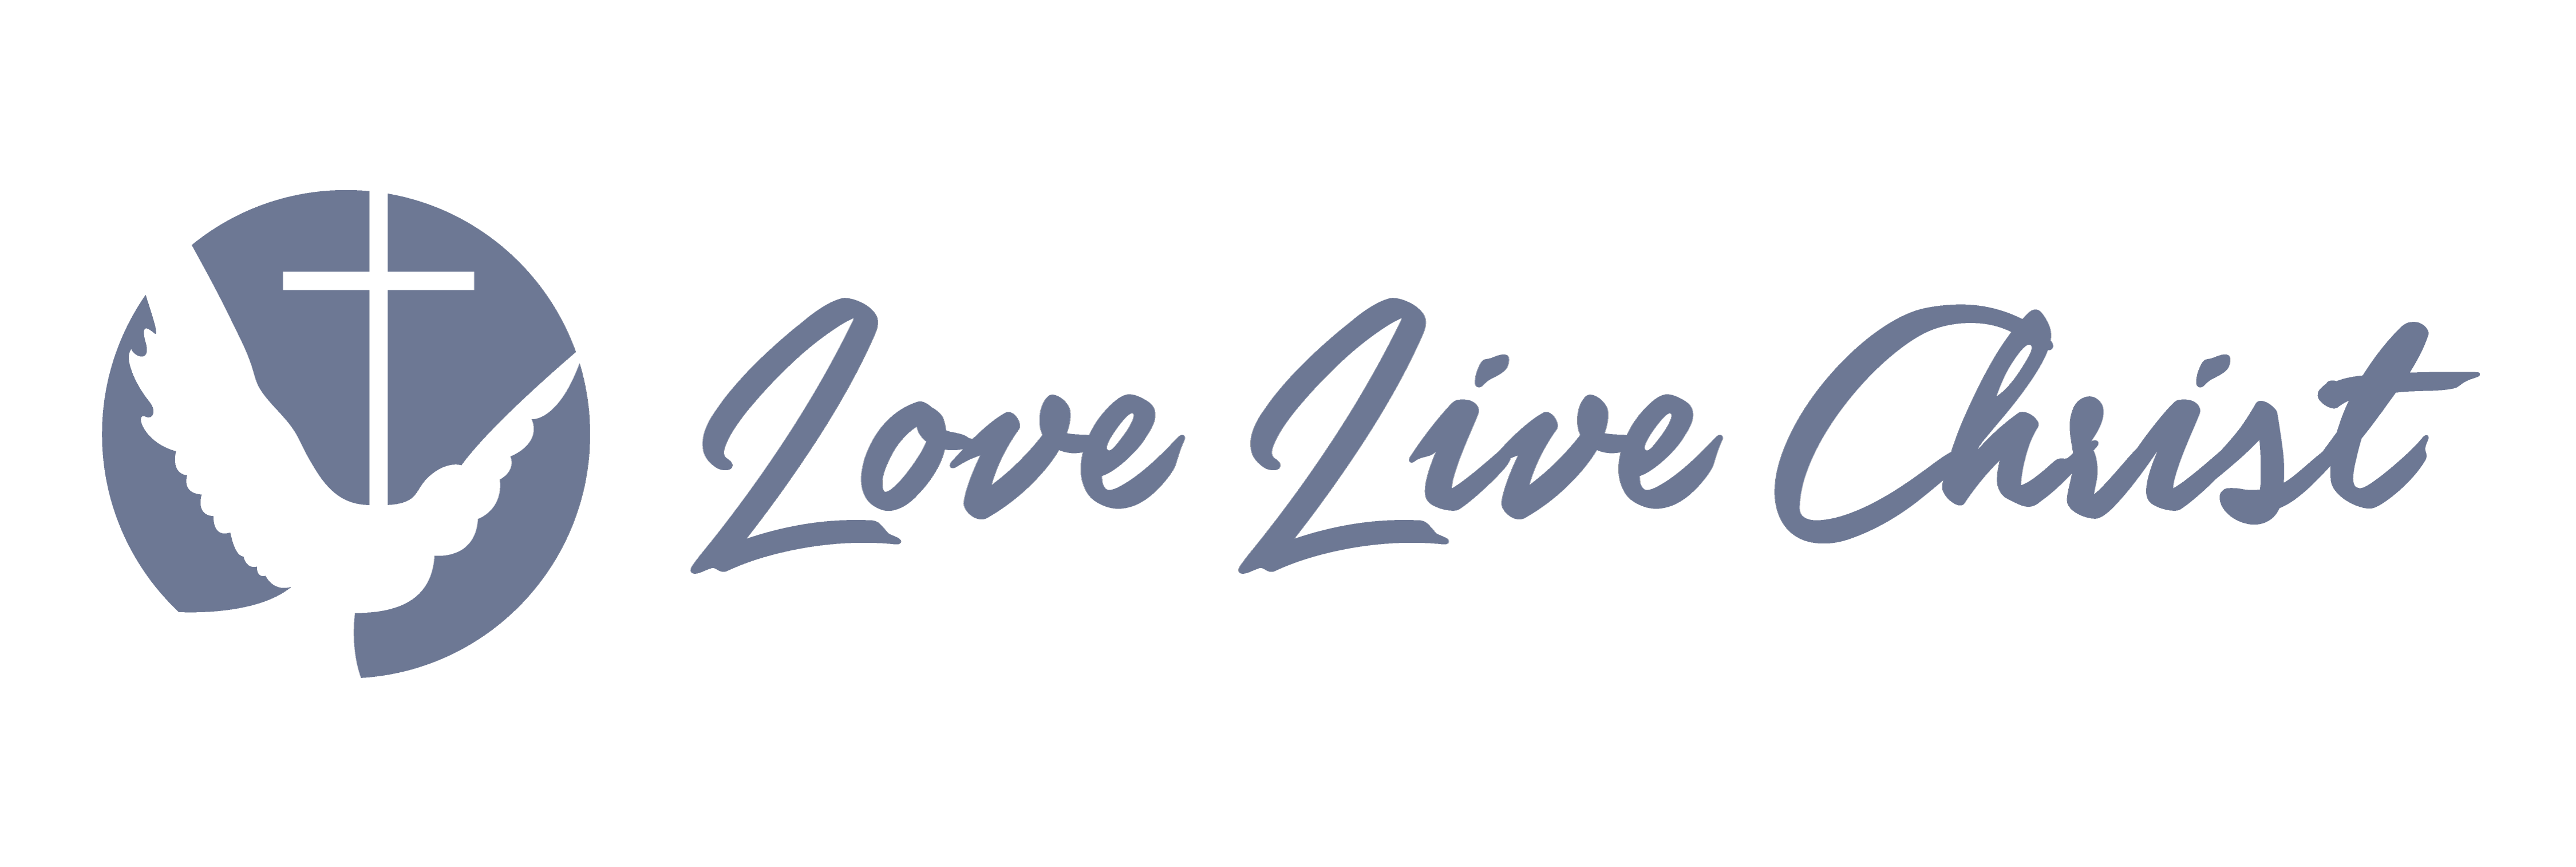 Love Live Christ logo